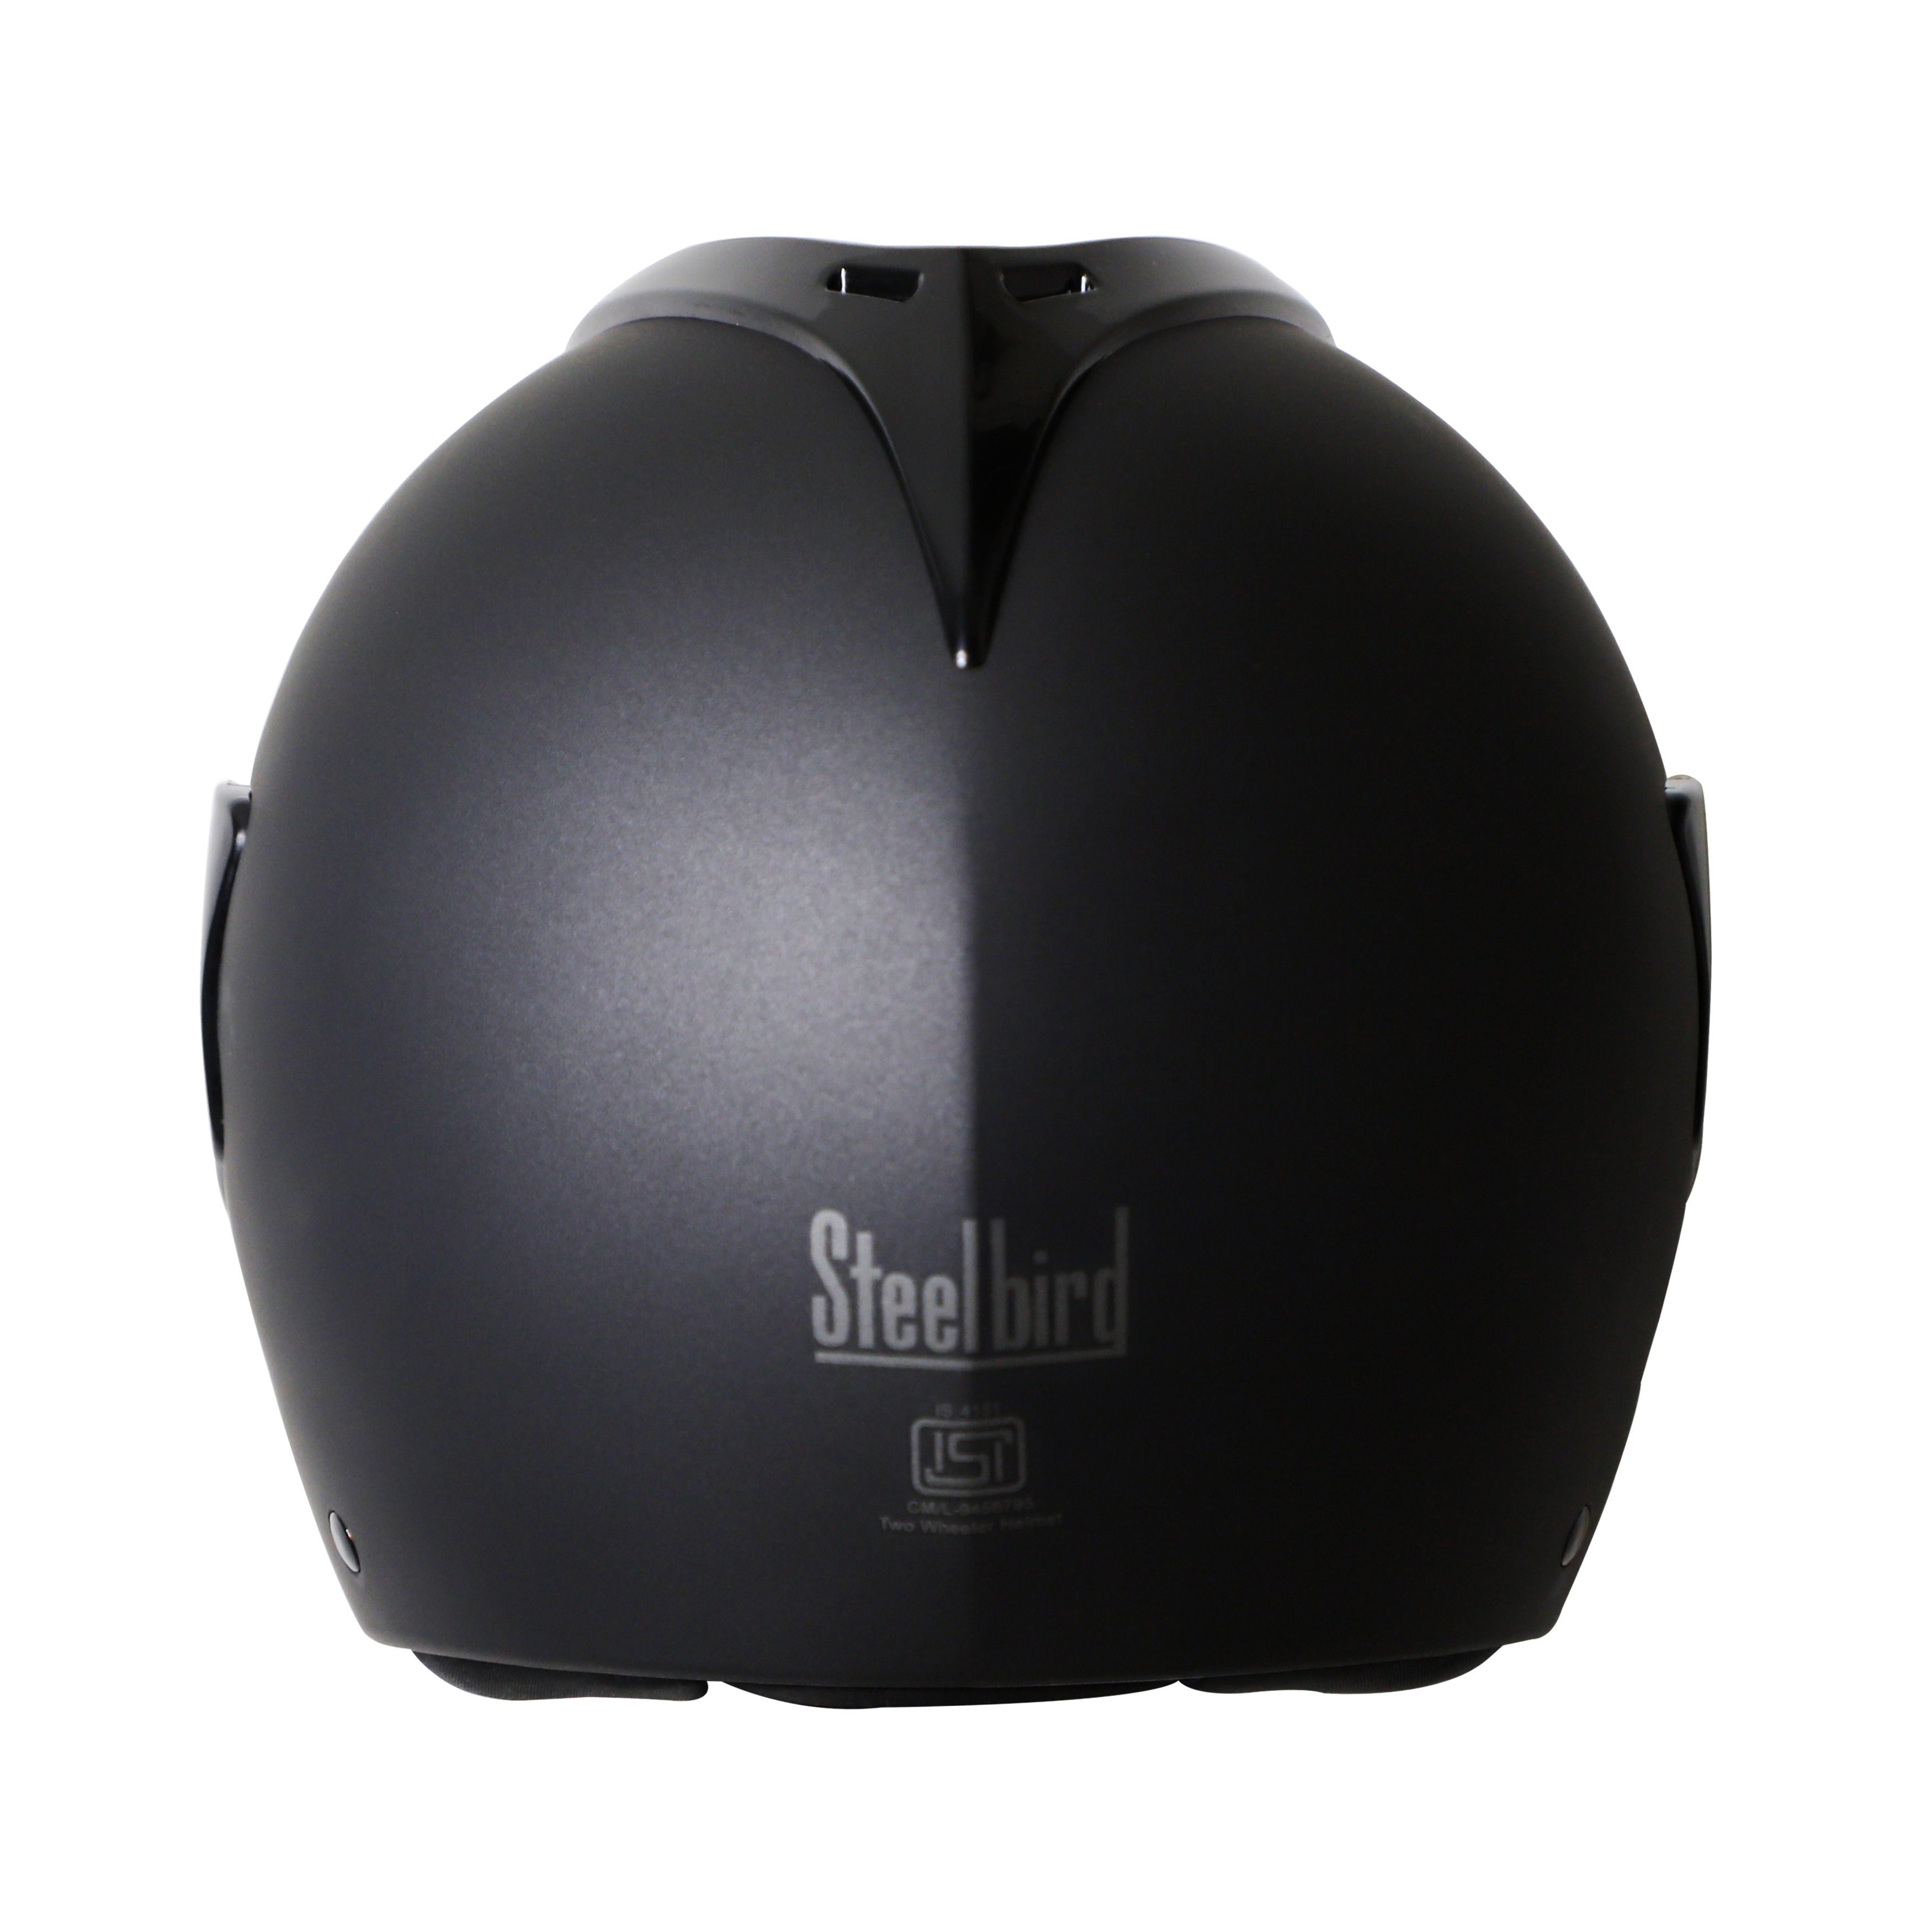 Steelbird SB-34 TRX ISI Certified Flip-Up Helmet For Men And Women (Matt Midnight Black With Chrome Gold Visor)